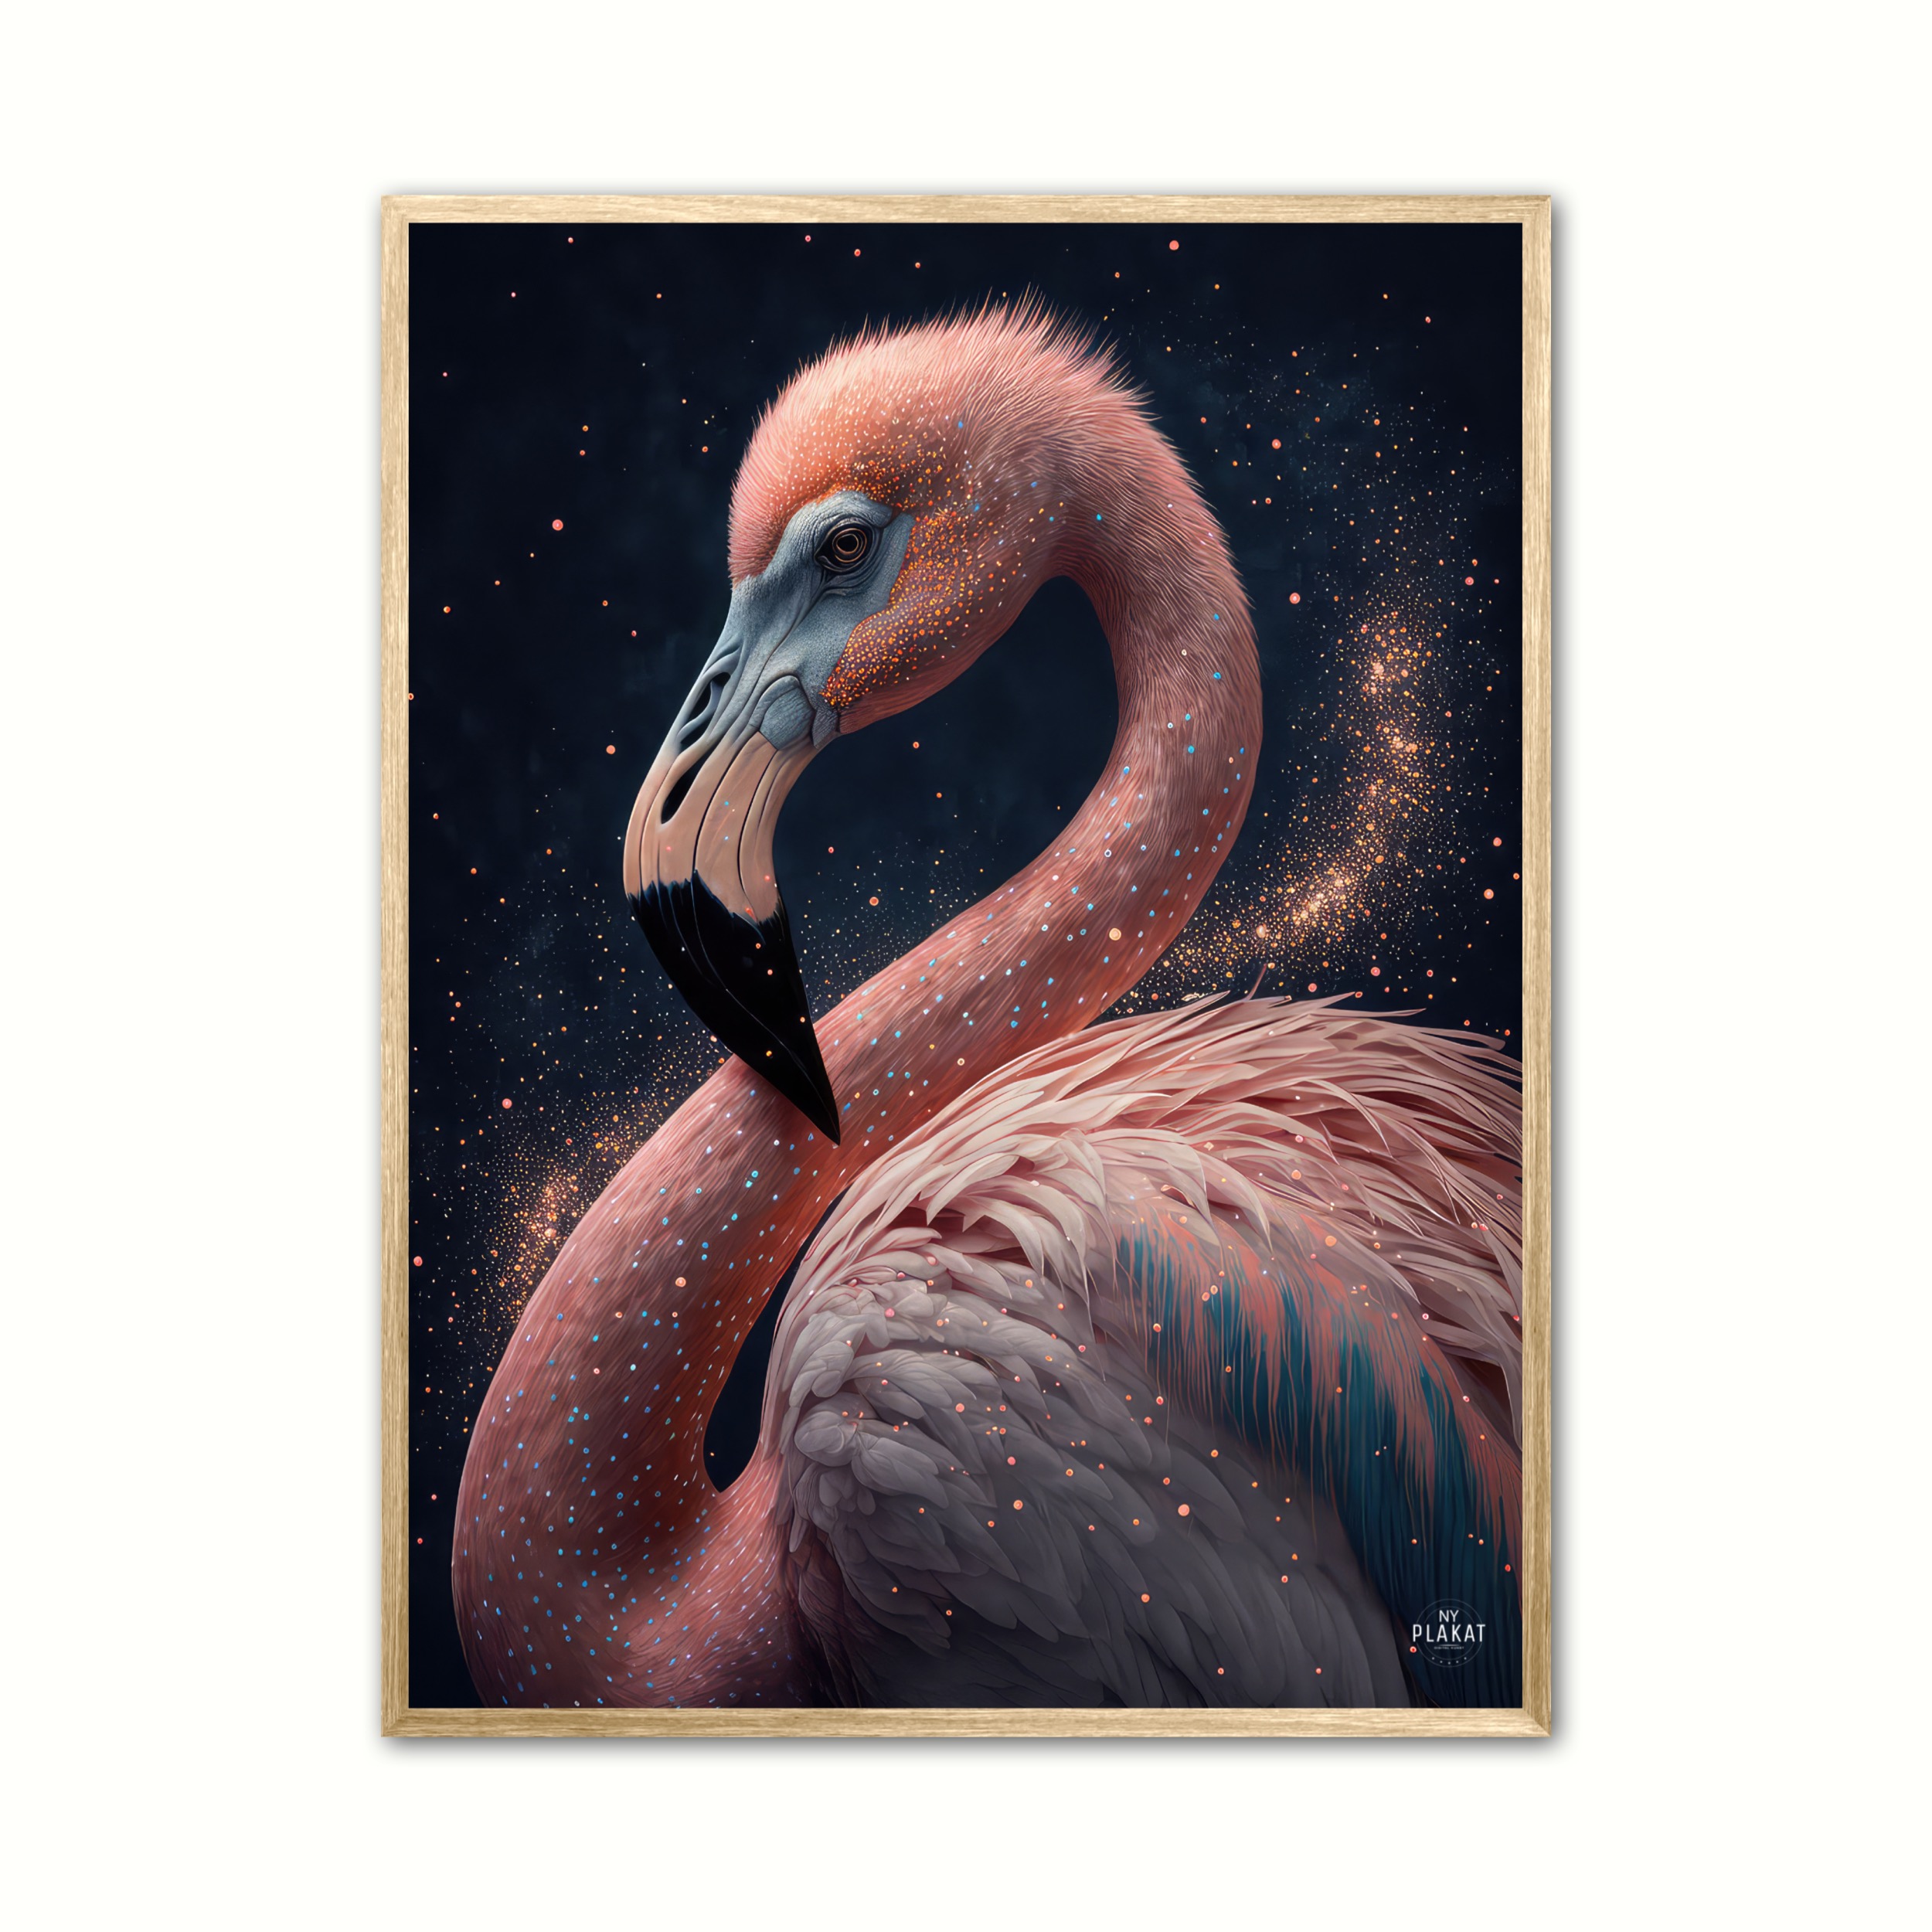 Plakat med Flamingo Nr. 1 21 x 29,7 cm (A4)